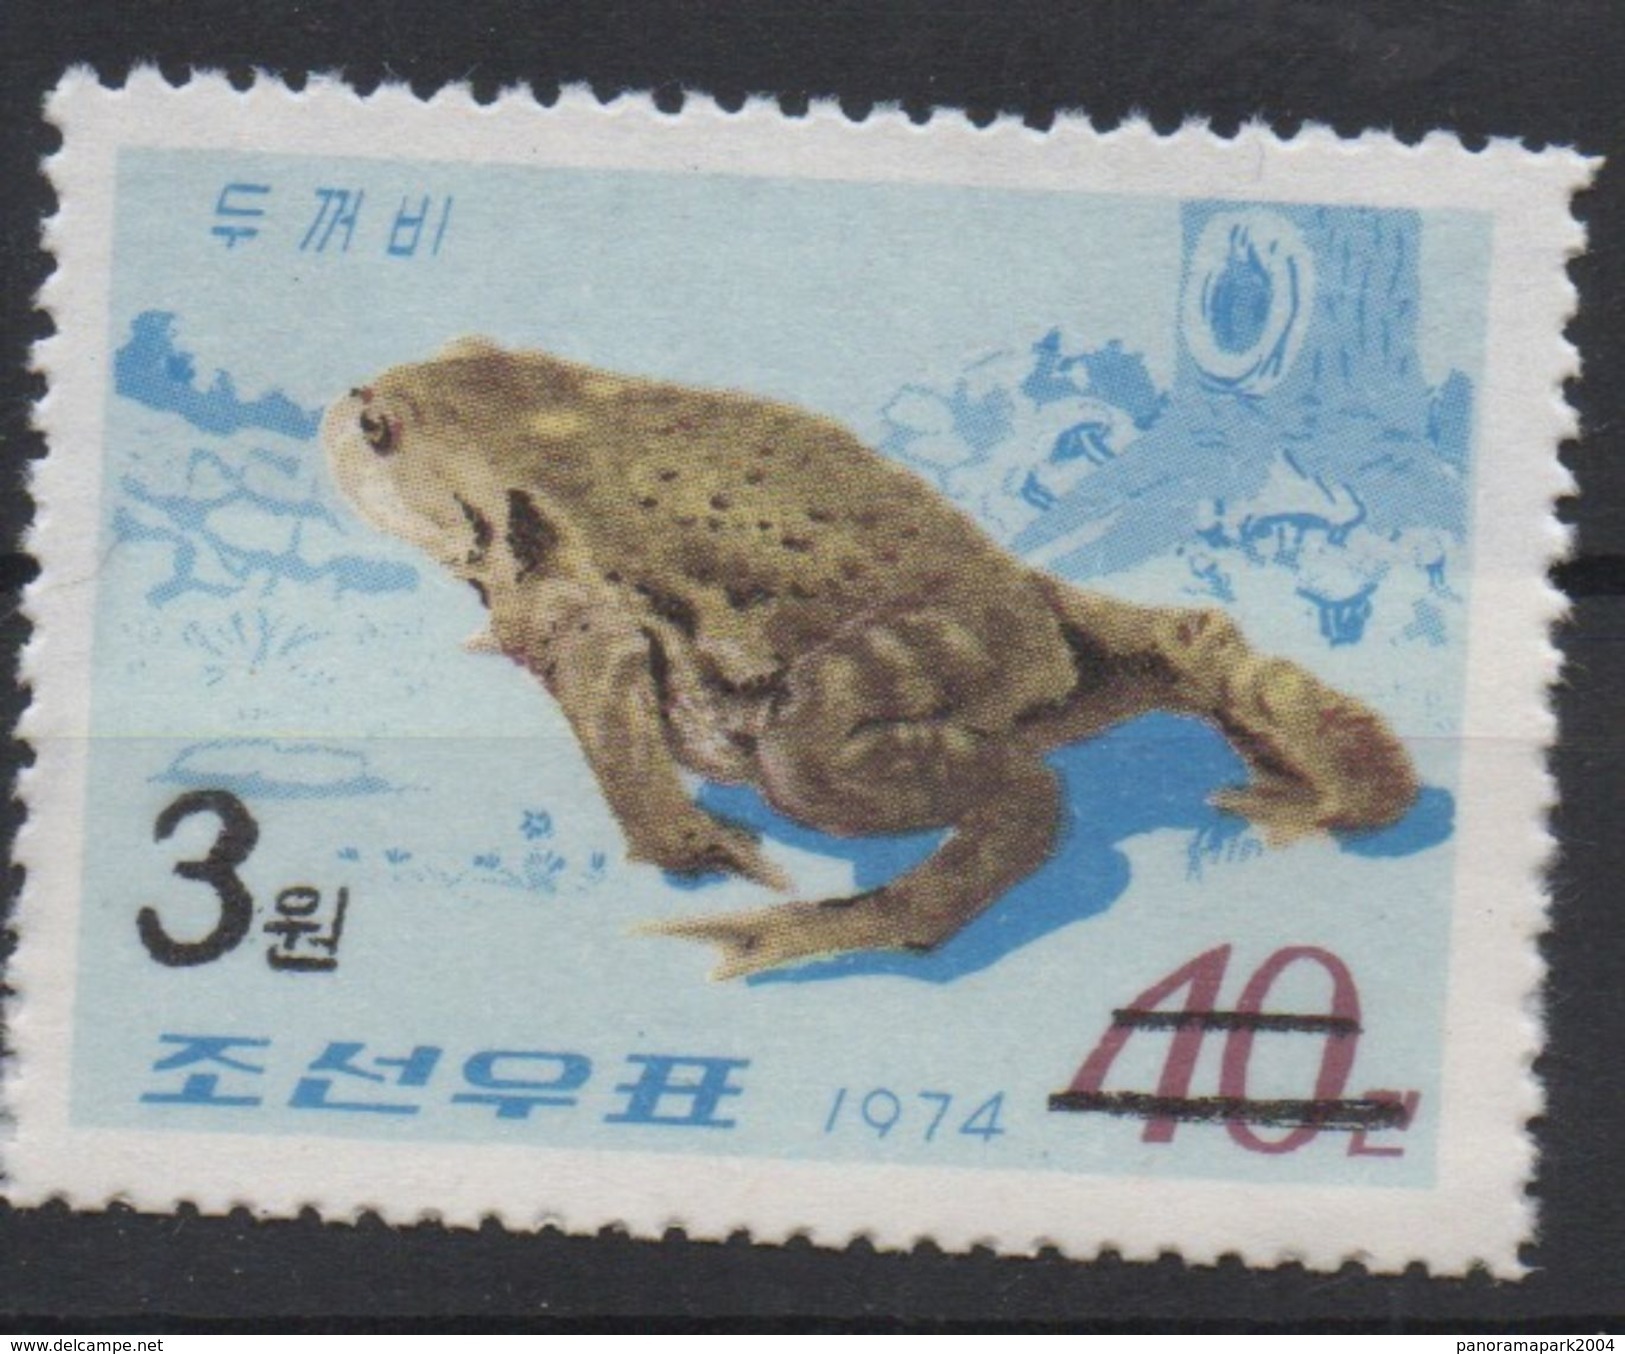 North Korea Corée Du Nord 2006 Mi. 5032 Surchargé Überdruck OVERPRINT Faune Fauna Grenouille Frog Frosch MNH** RARE - Frogs